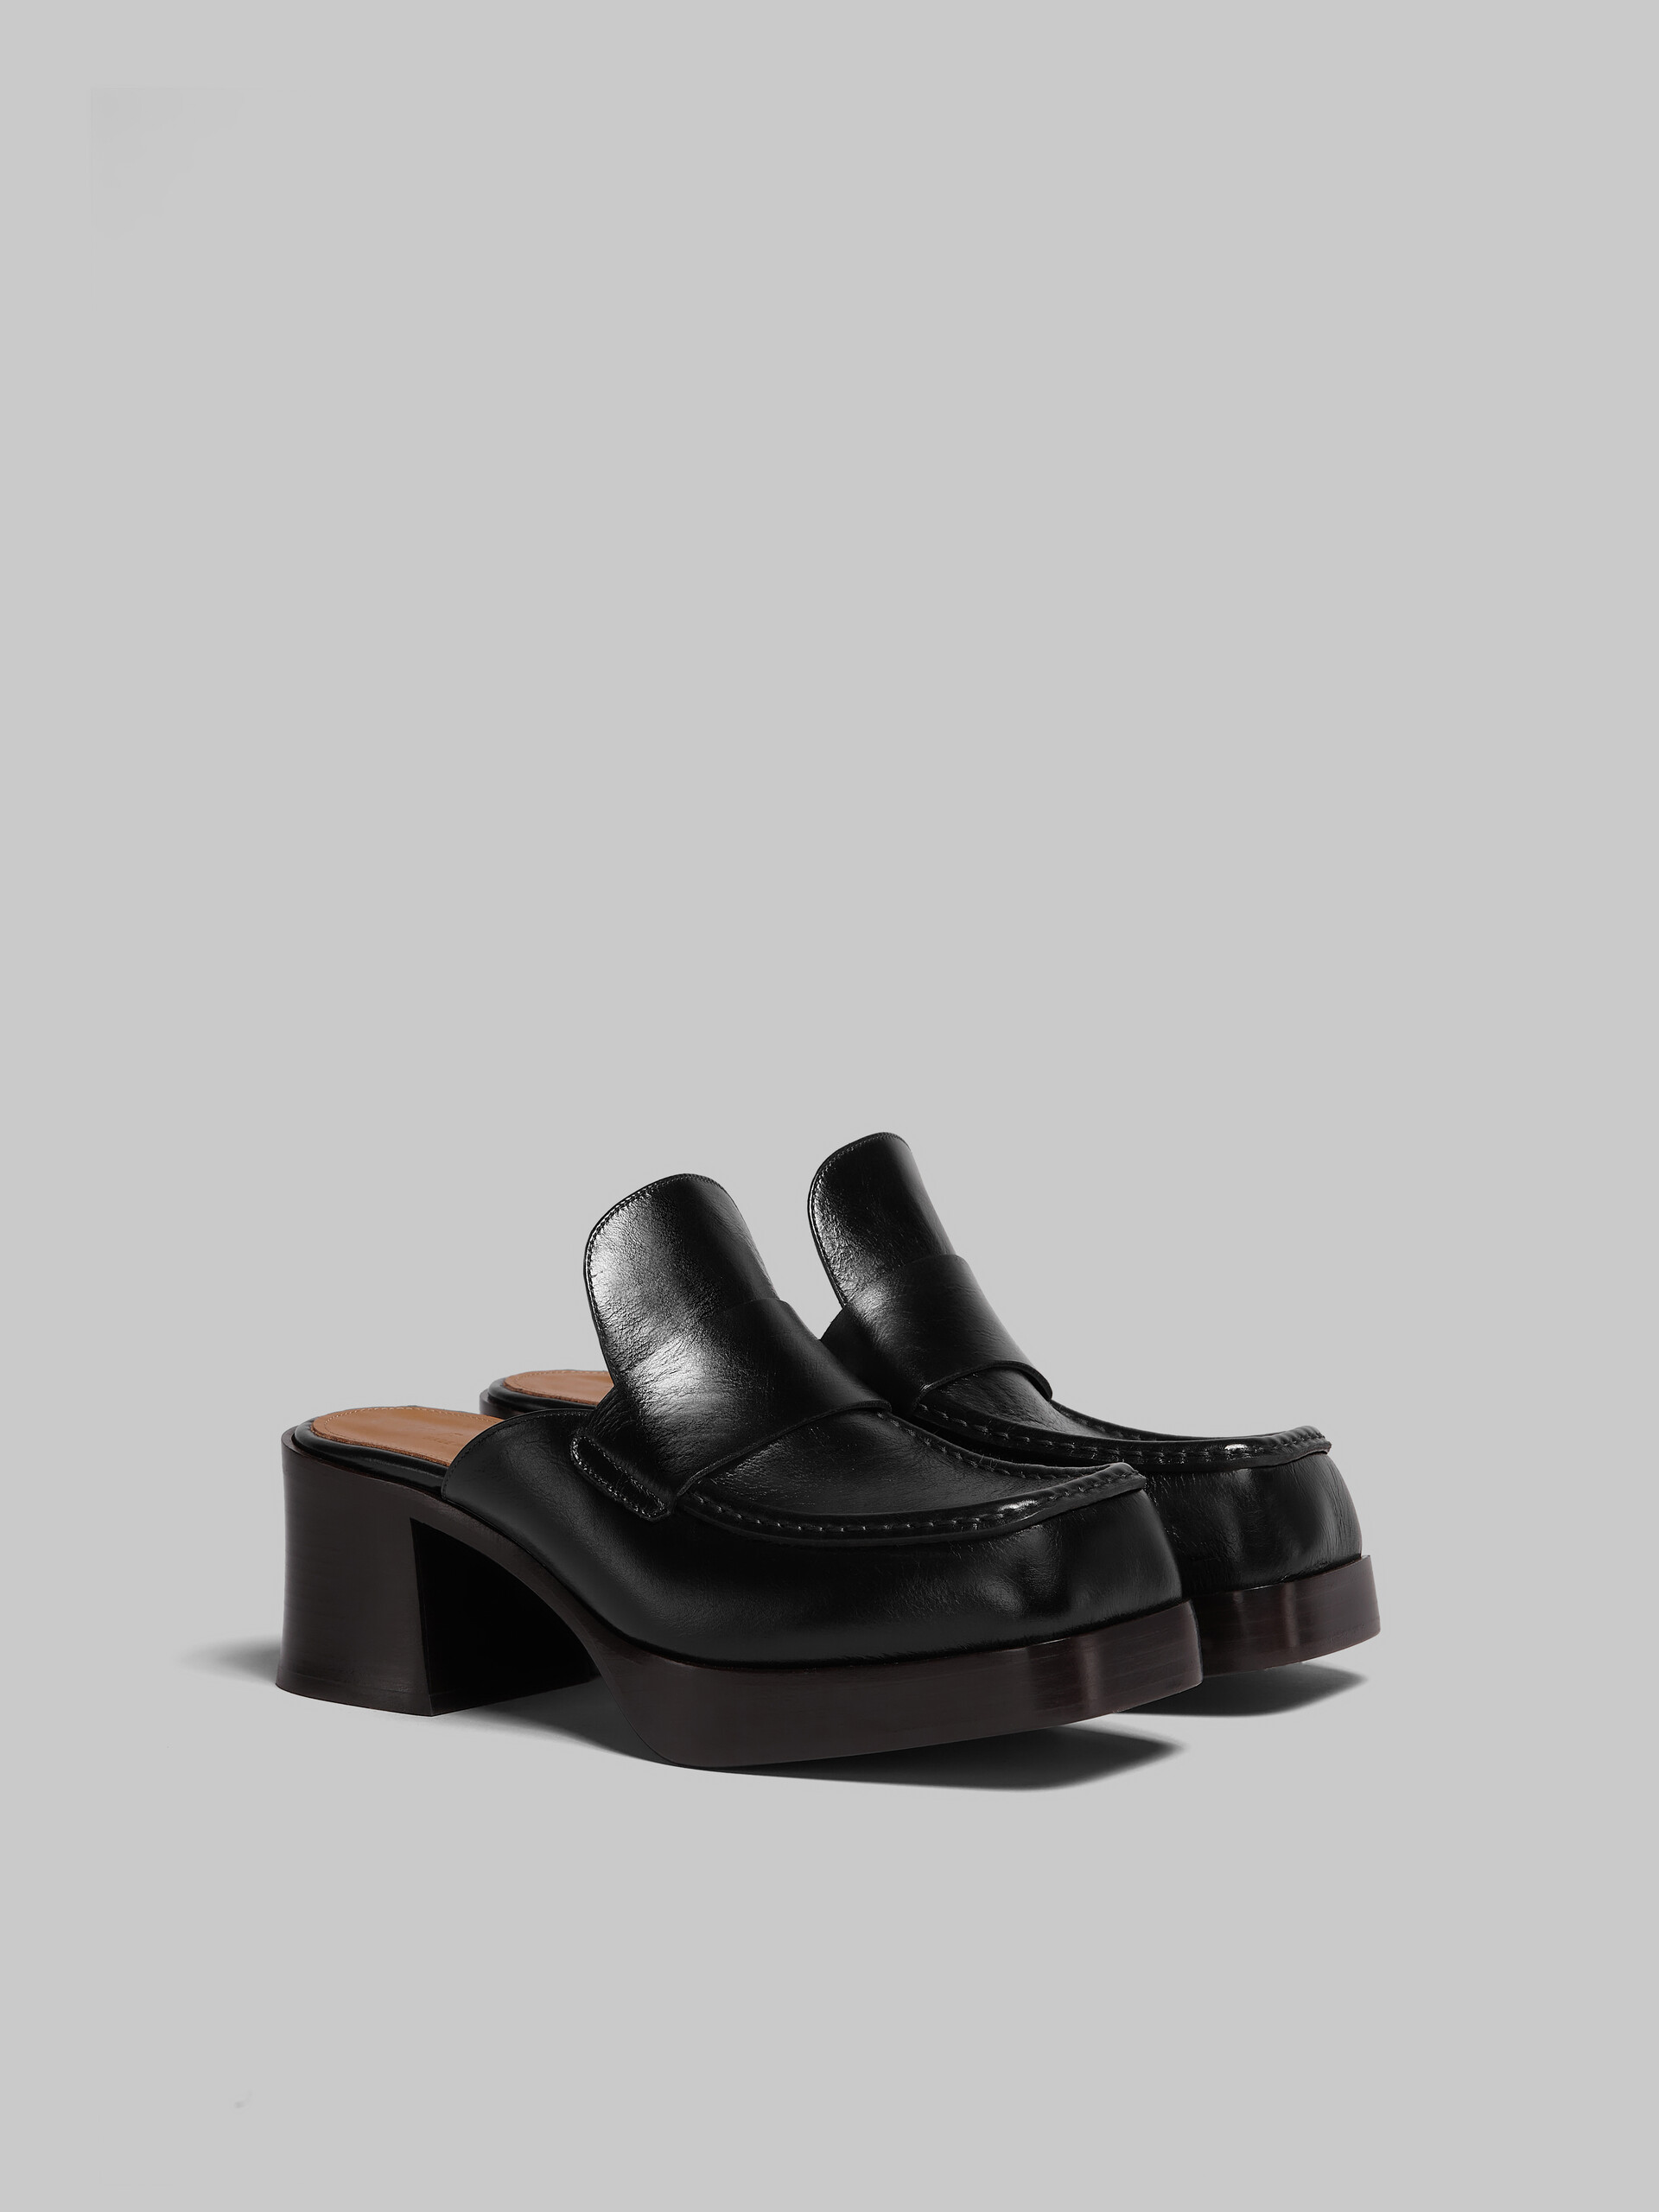 Black leather heeled mule - Clogs - Image 2